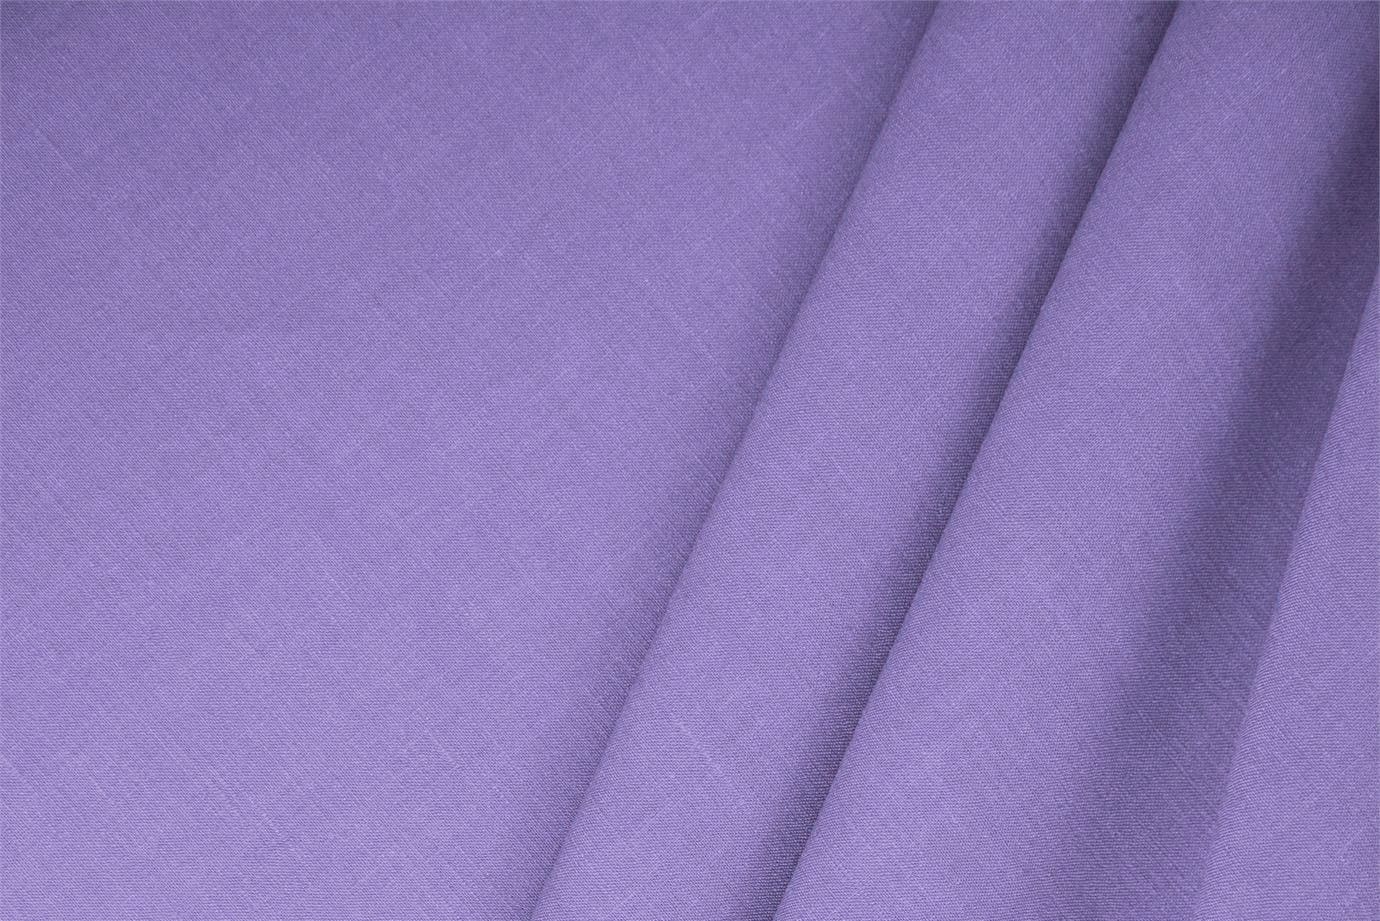 Lilac Purple Linen, Stretch, Viscose Linen Blend fabric for dressmaking